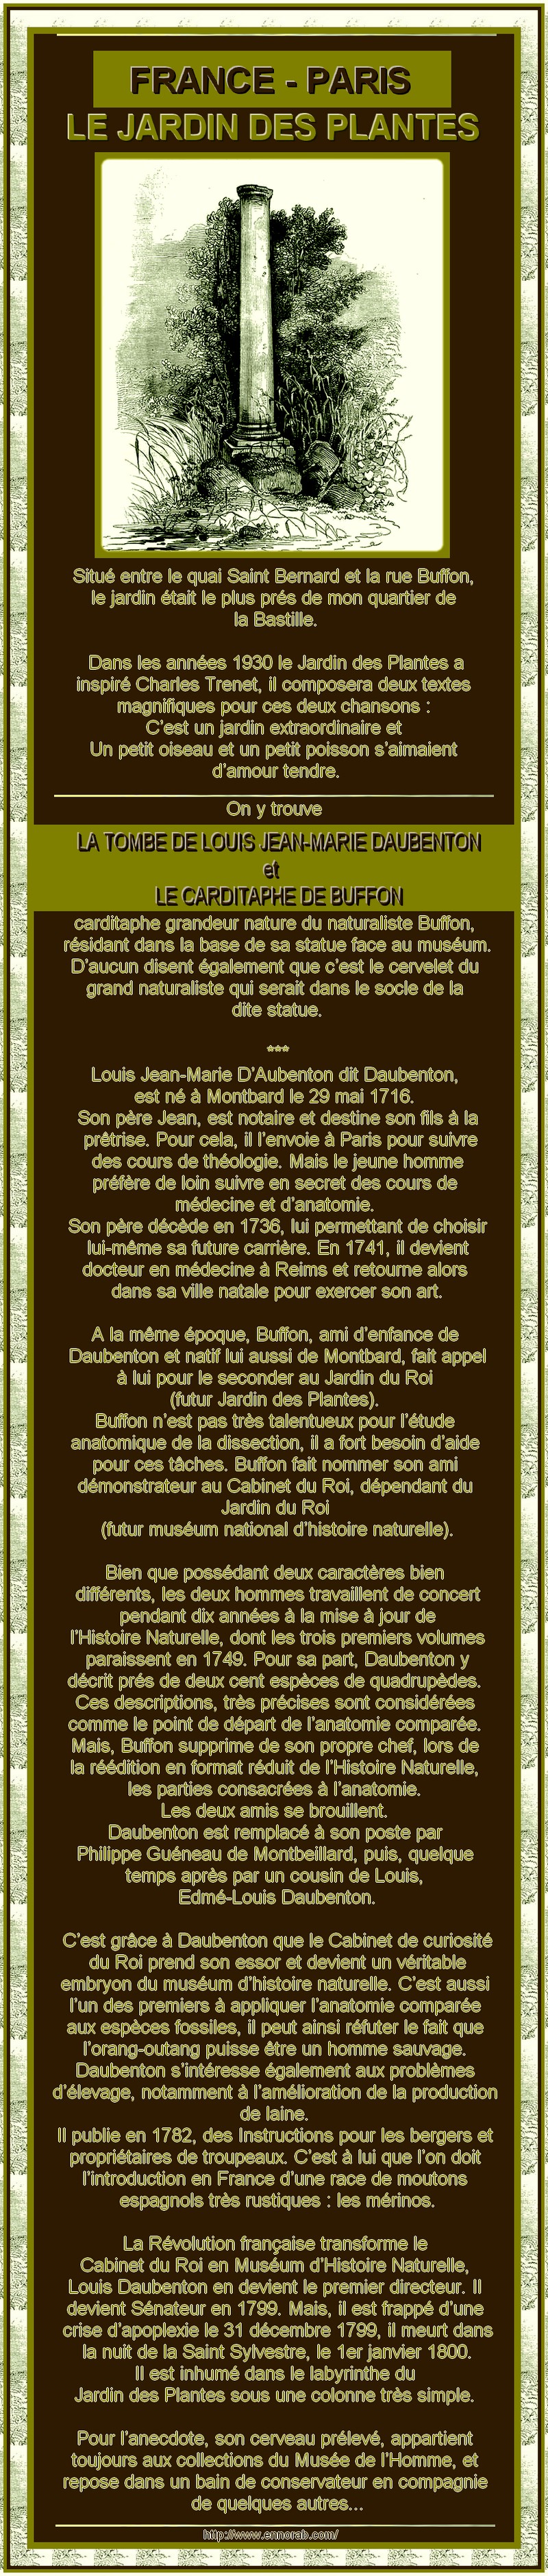 FRANCE - PARIS -JARDIN DES PLANTES - LA TOMBE DE LOUIS JEAN-MARIE DAUBENTON - LE CARDITAPHE DE BUFFON 1201290702201431779364921